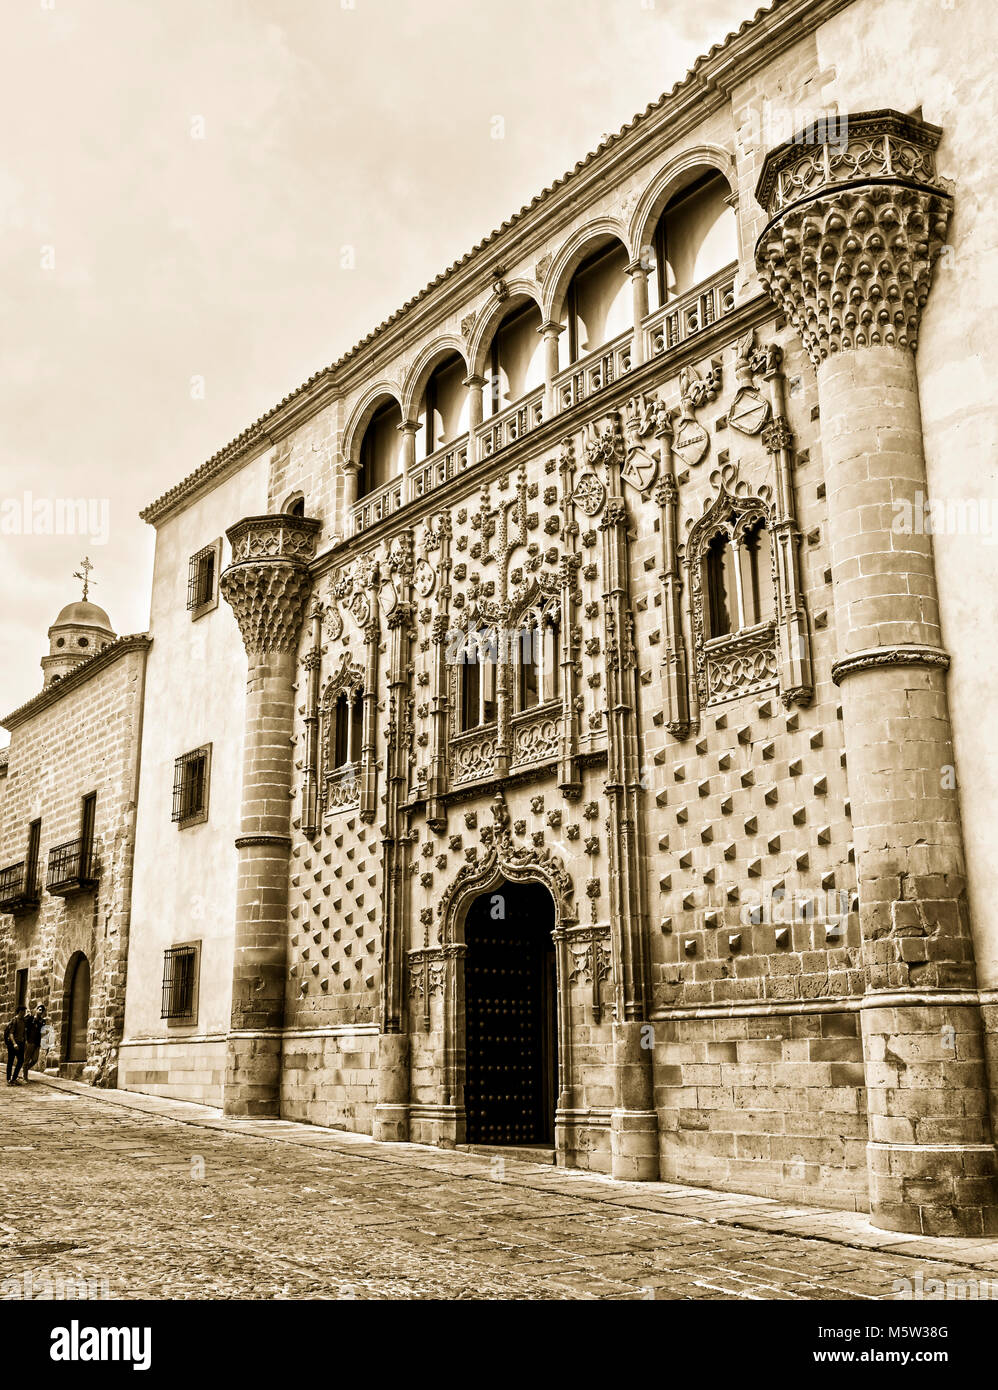 Palacio renacentista de Jabalquinto. Baeza. Jaén. L'Andalousie. España Banque D'Images